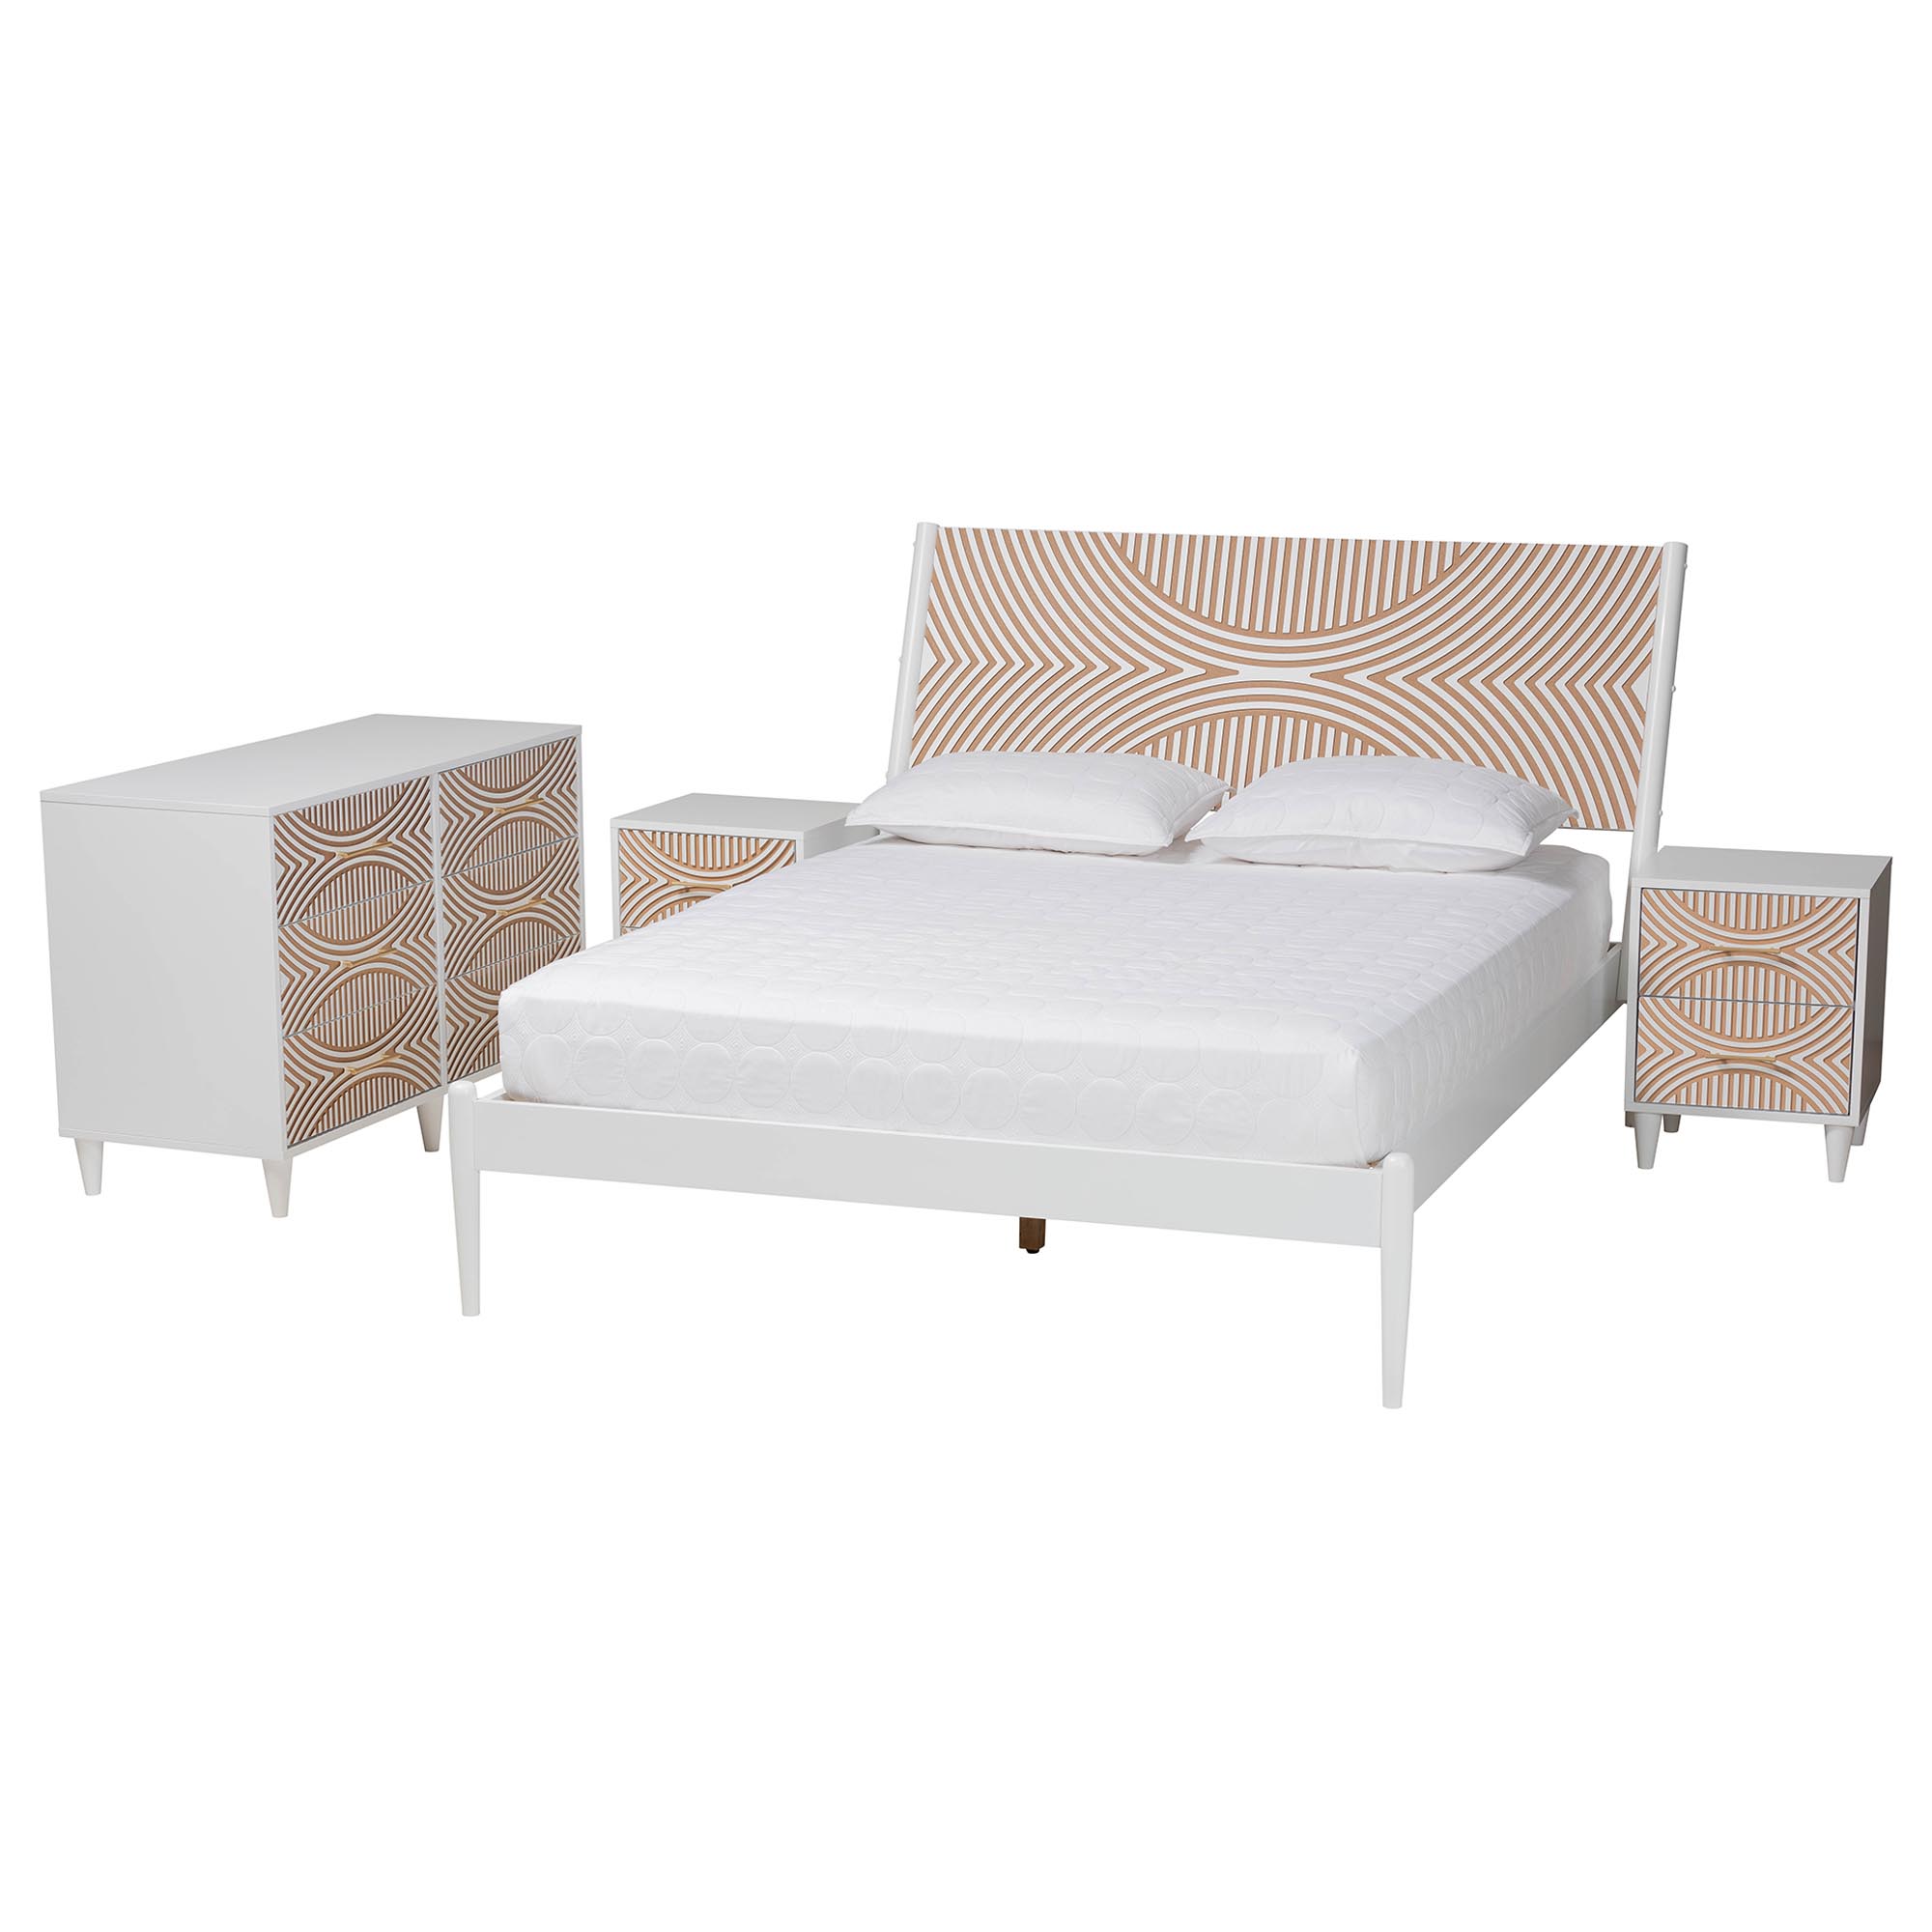 Baxton Studio Louetta Coastal White Caved Contrasting Queen Size 4-Piece Bedroom Set